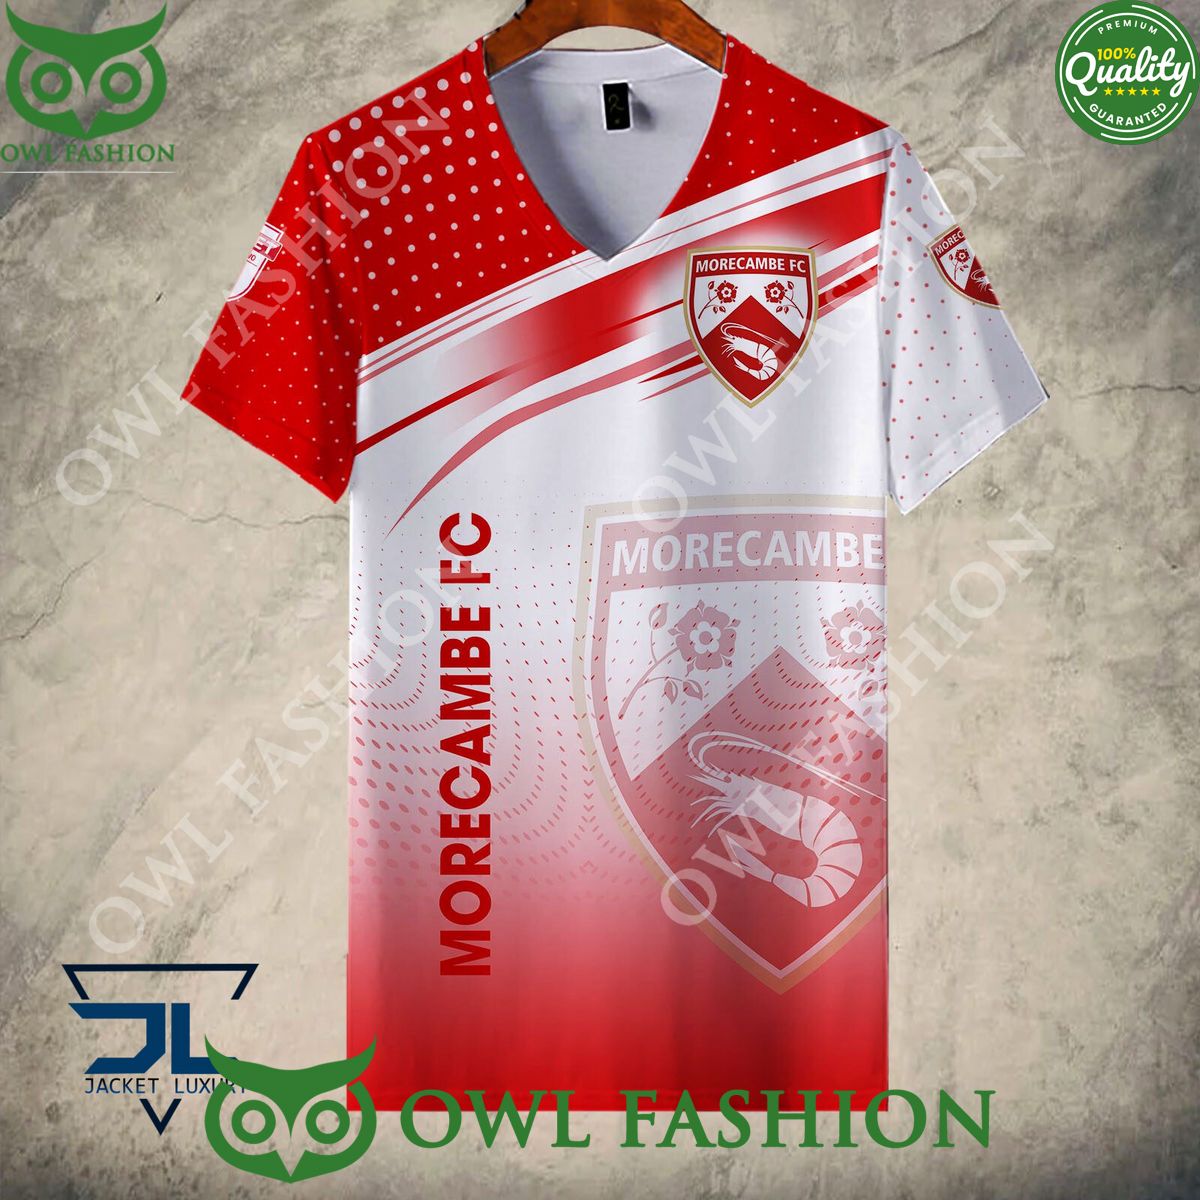 morecambe f c trending design league two hoodie shirt 10 4efK3.jpg